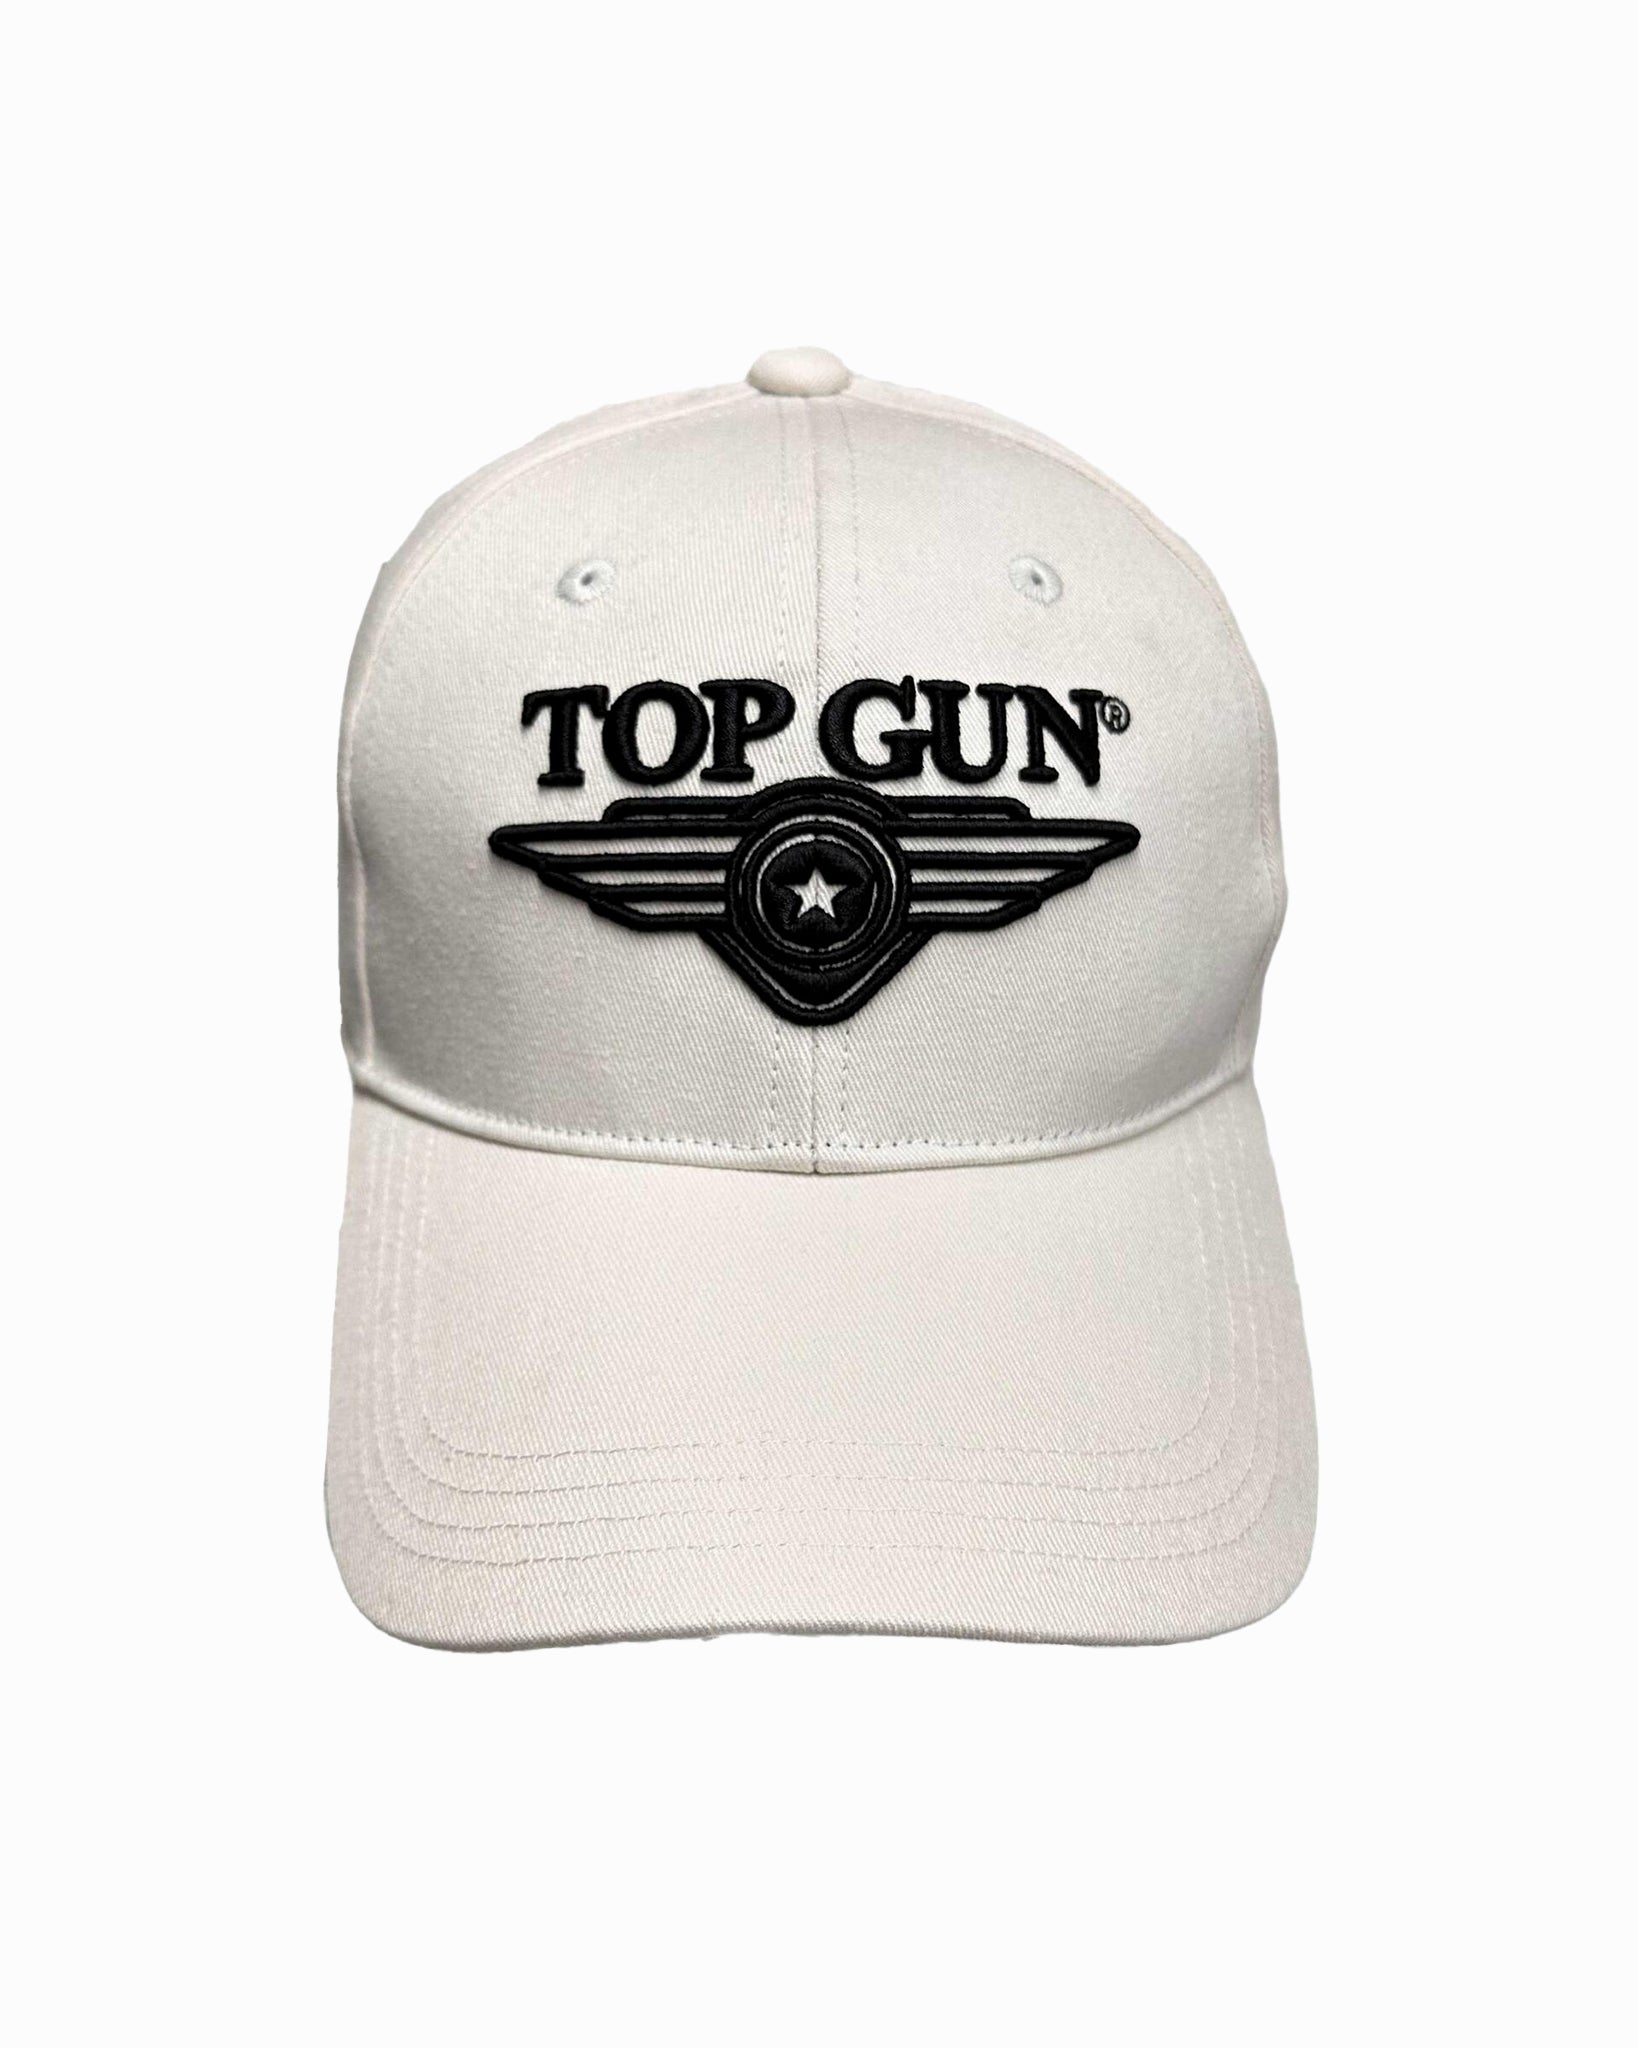 Top CAP Store – GUN® TOP Gun 3D LOGO